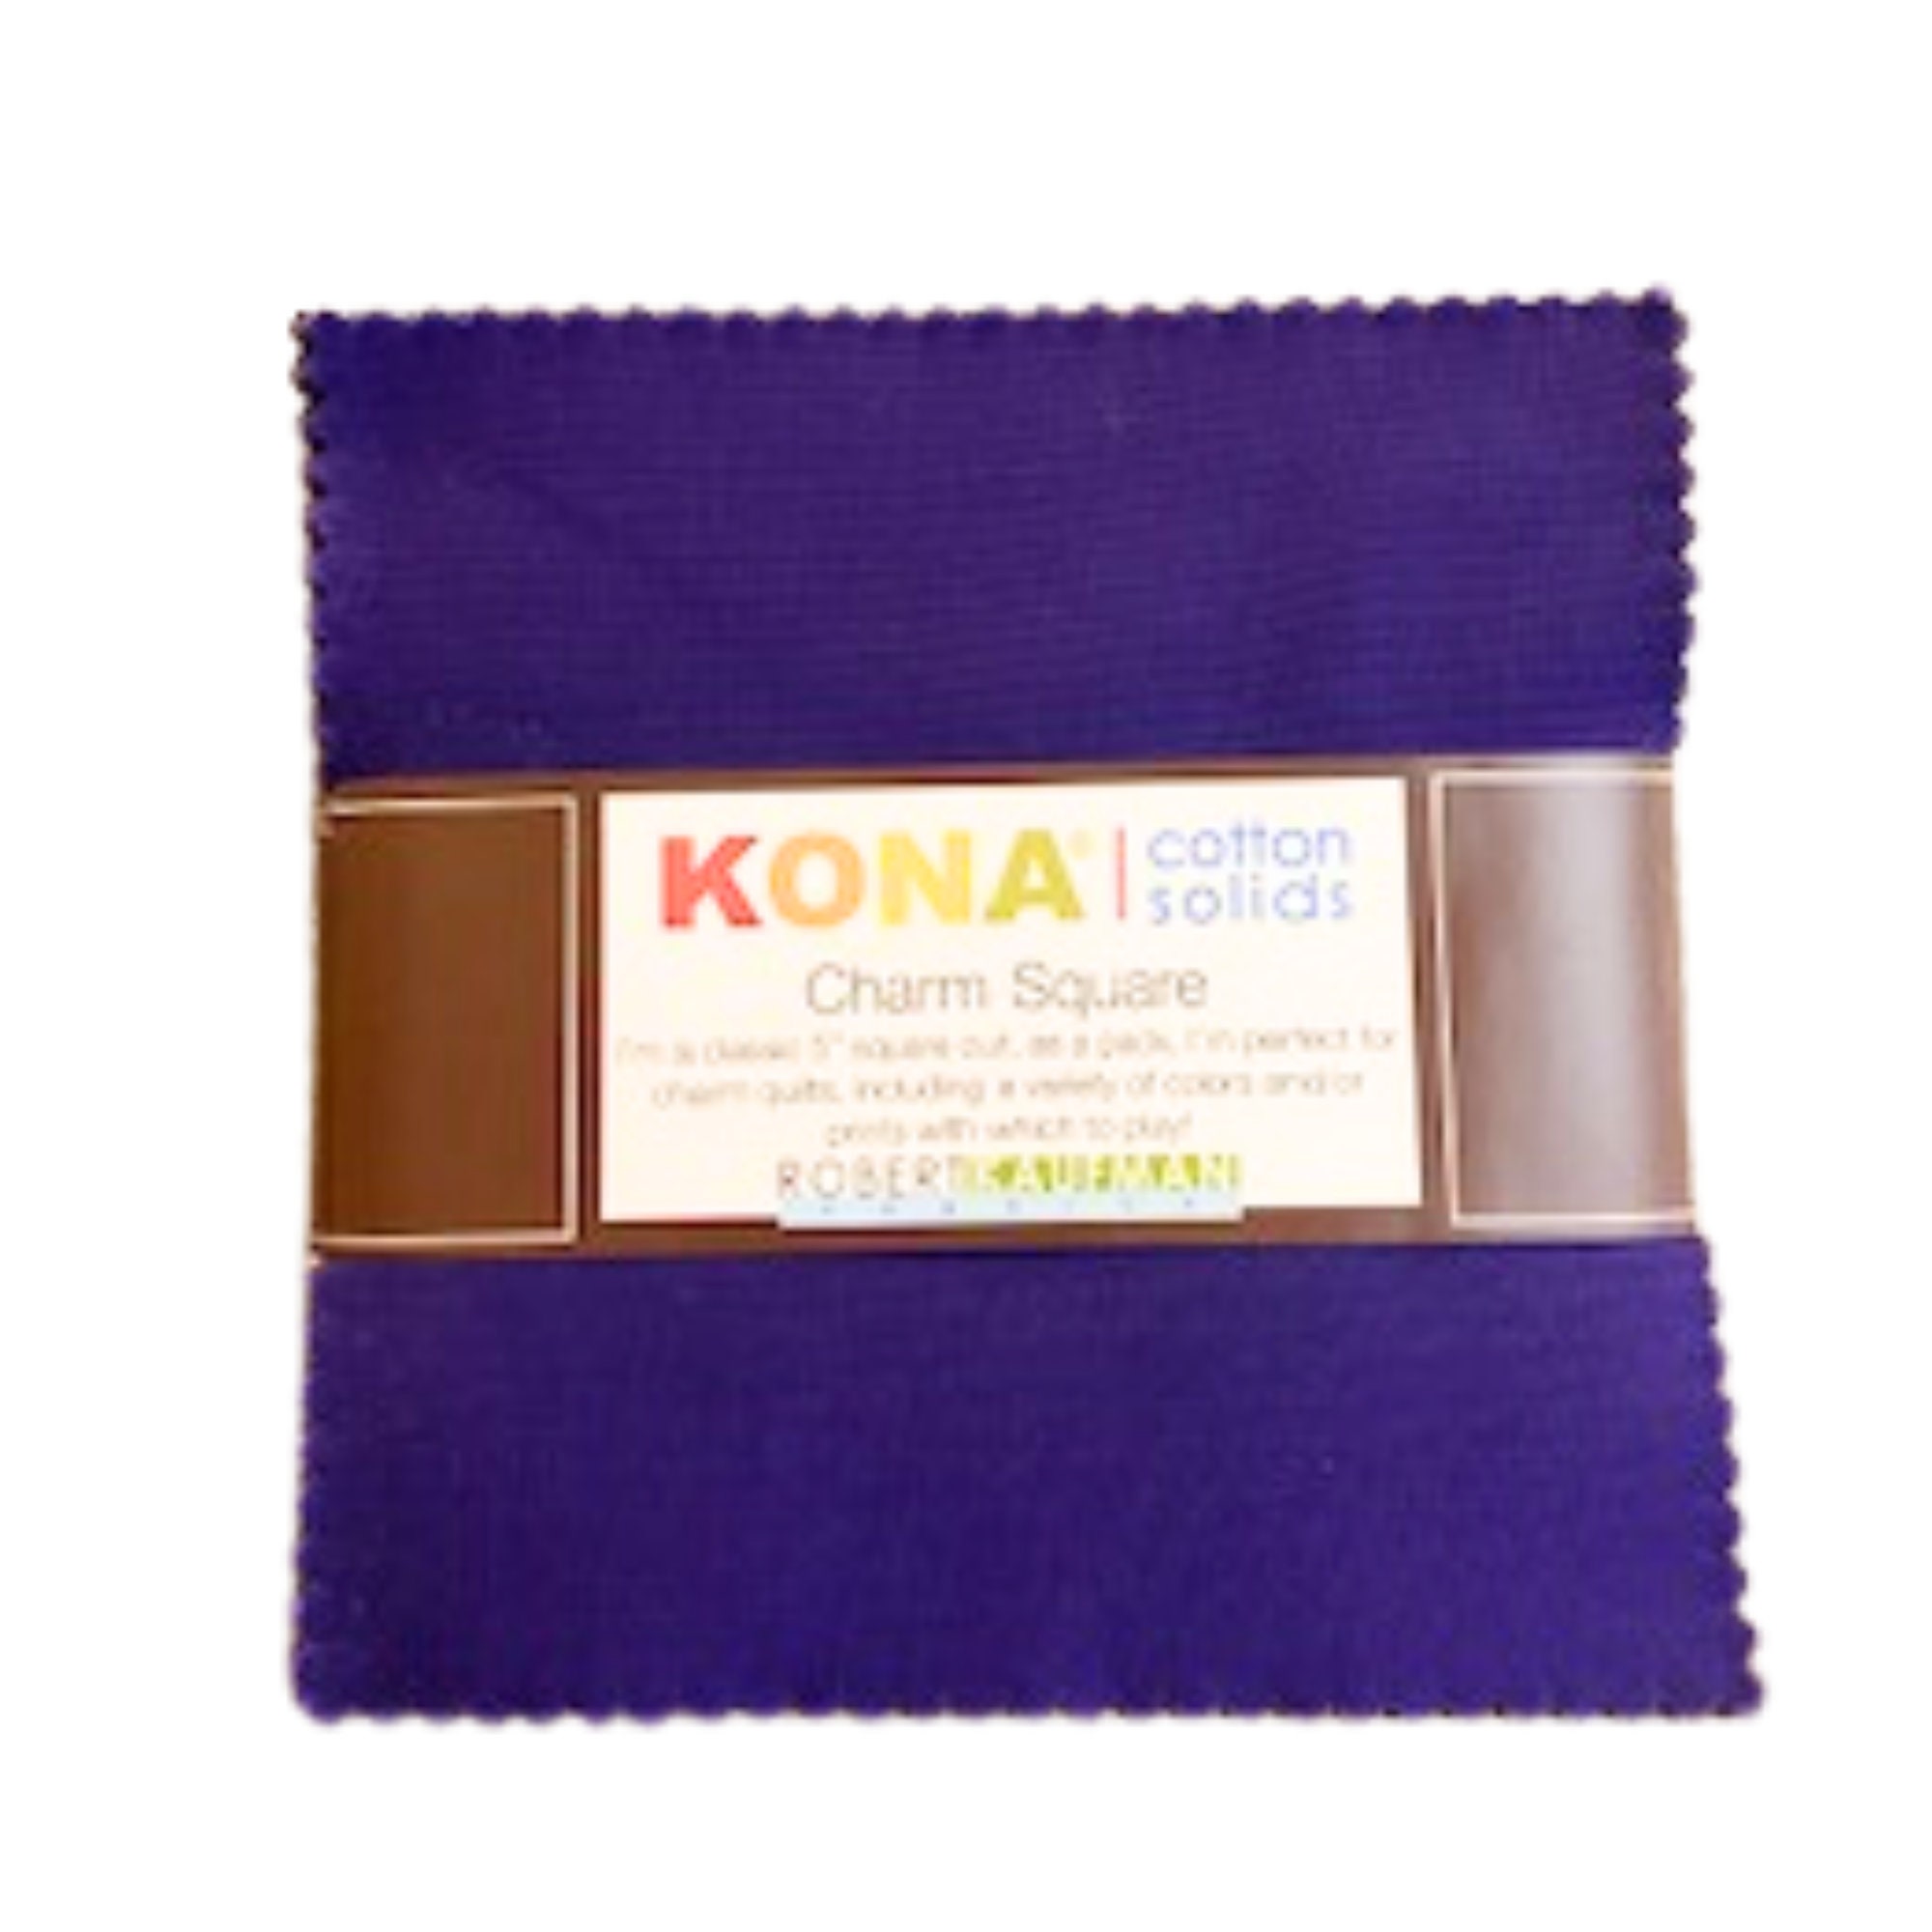 Robert Kaufman Kona Cotton Solids New Dark Roll Up 2.5 Precut Fabric  Quilting Strips RU-232-41 